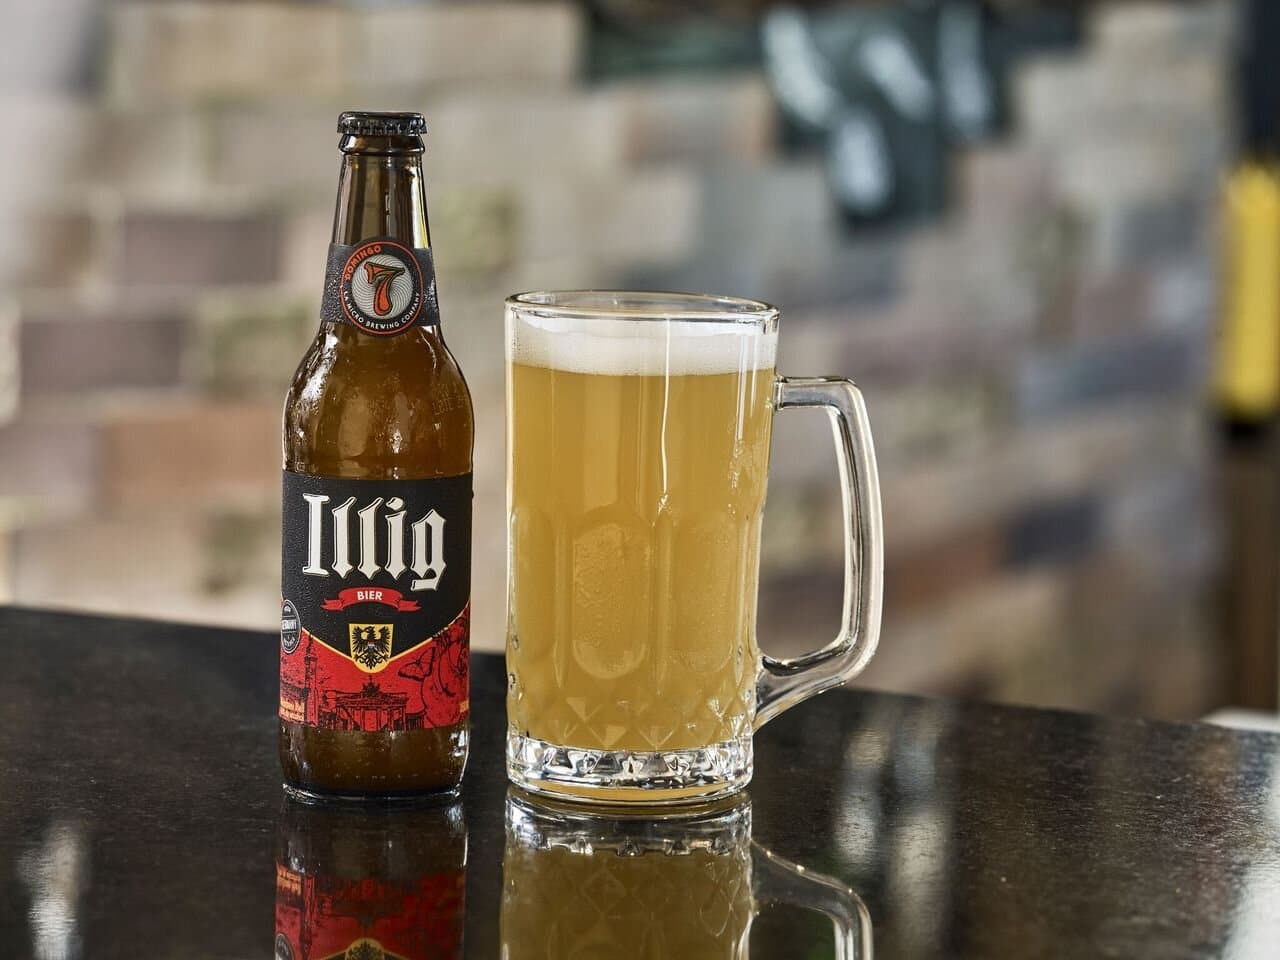 Illig Bier una cerveza artesanal de Illig Biergarten